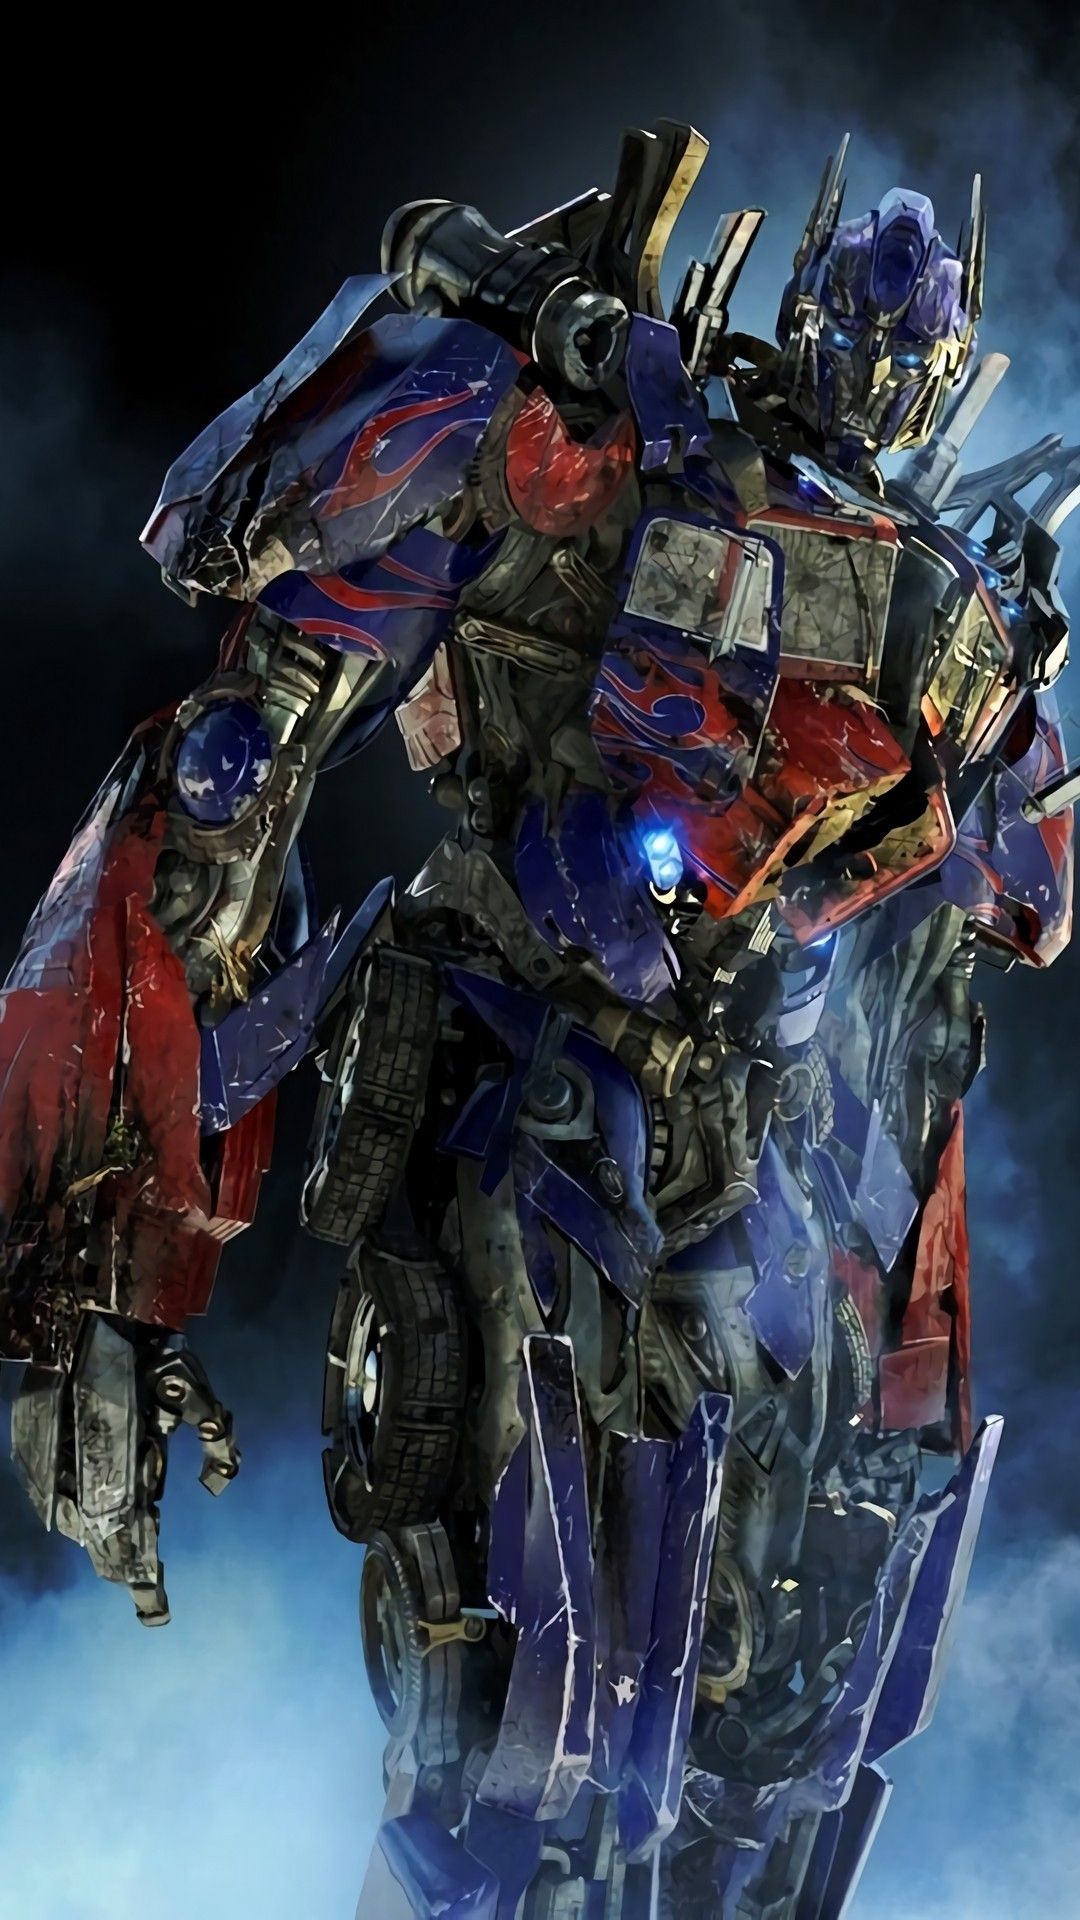  Transformers Hintergrundbild 1080x1920. Transformers Wallpaper ideas. transformers, wallpaper, transformers movie